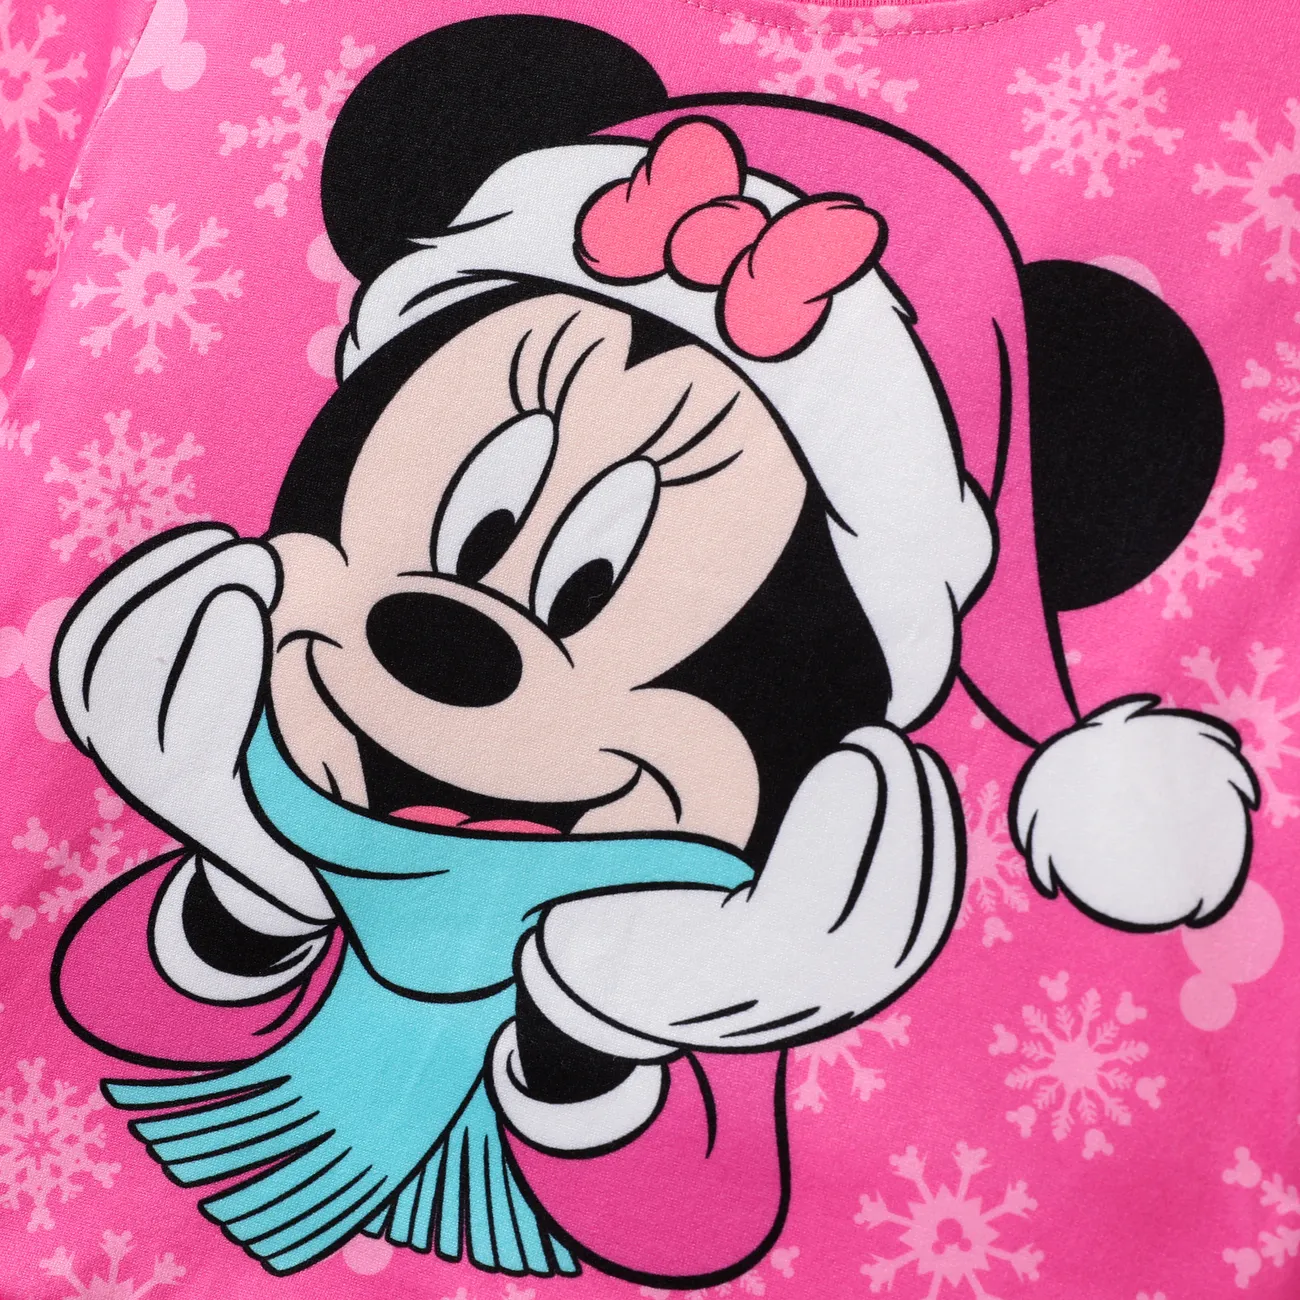 Disney Mickey and Friends Niño pequeño Chica Costura de tela Infantil conjuntos de chaqueta Rosado big image 1